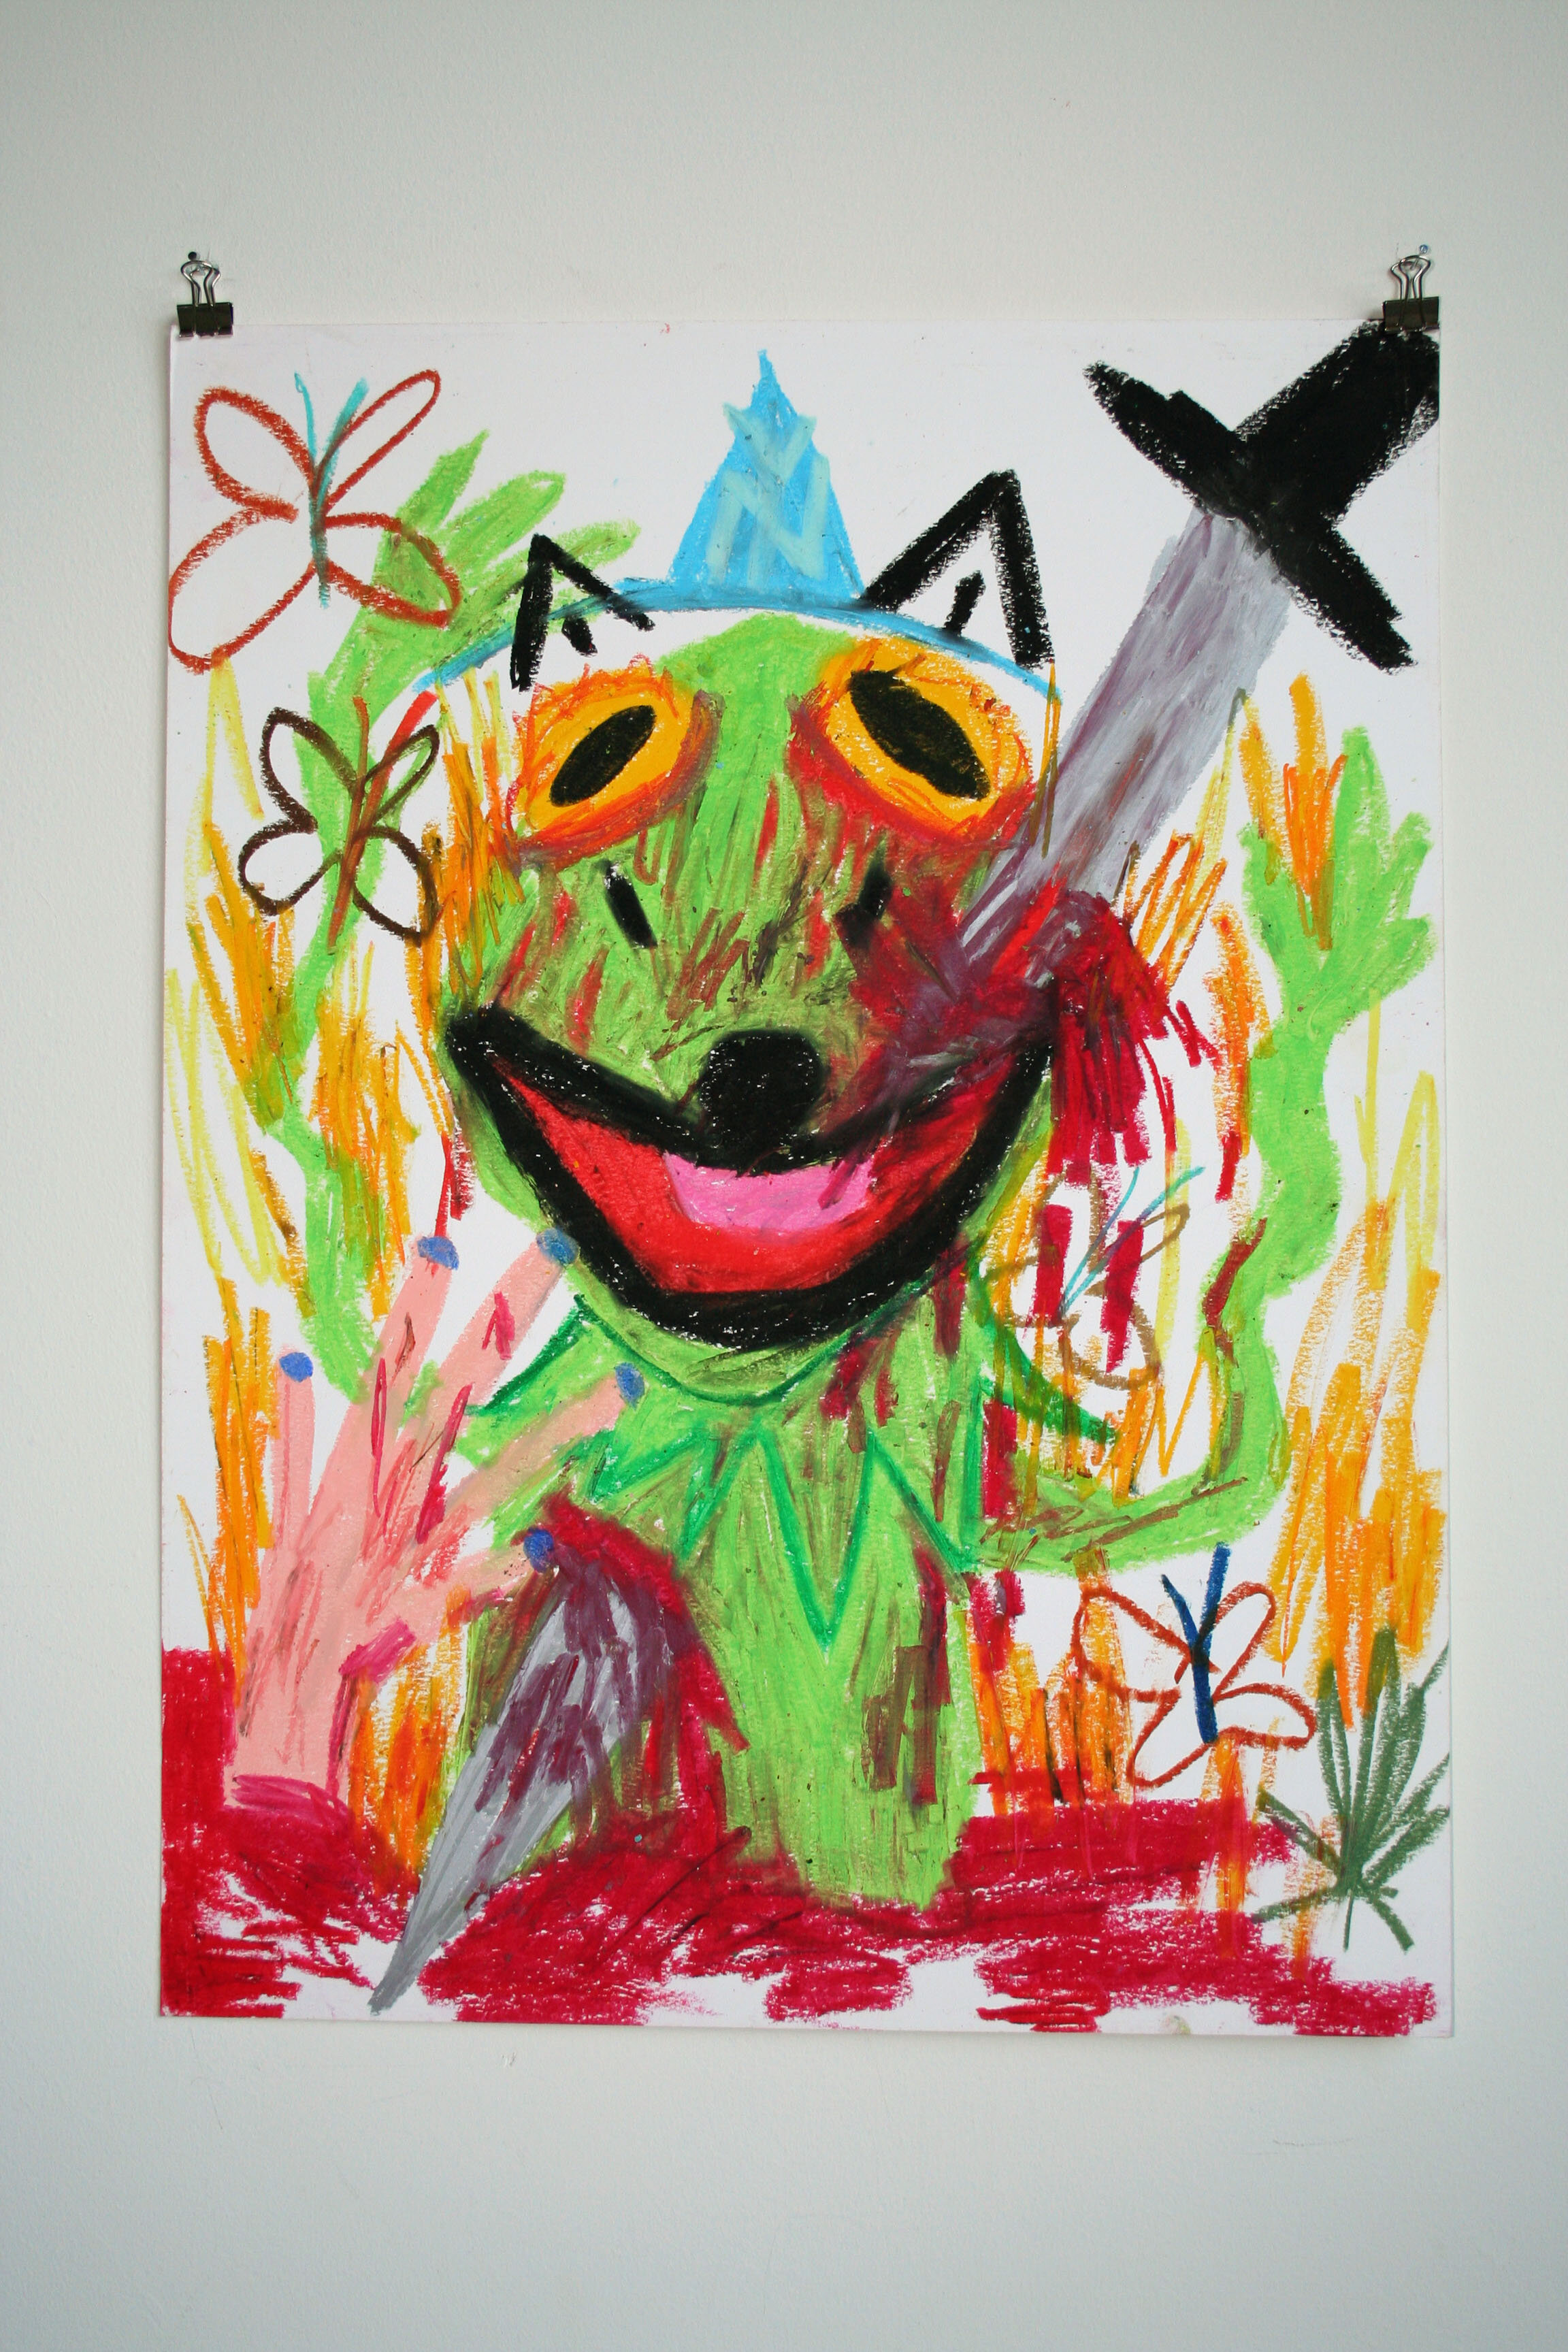   Puppet Massacre , 2014  24 x 18 inches (60.96 x 45.72 cm.)  Oil pastel on paper 